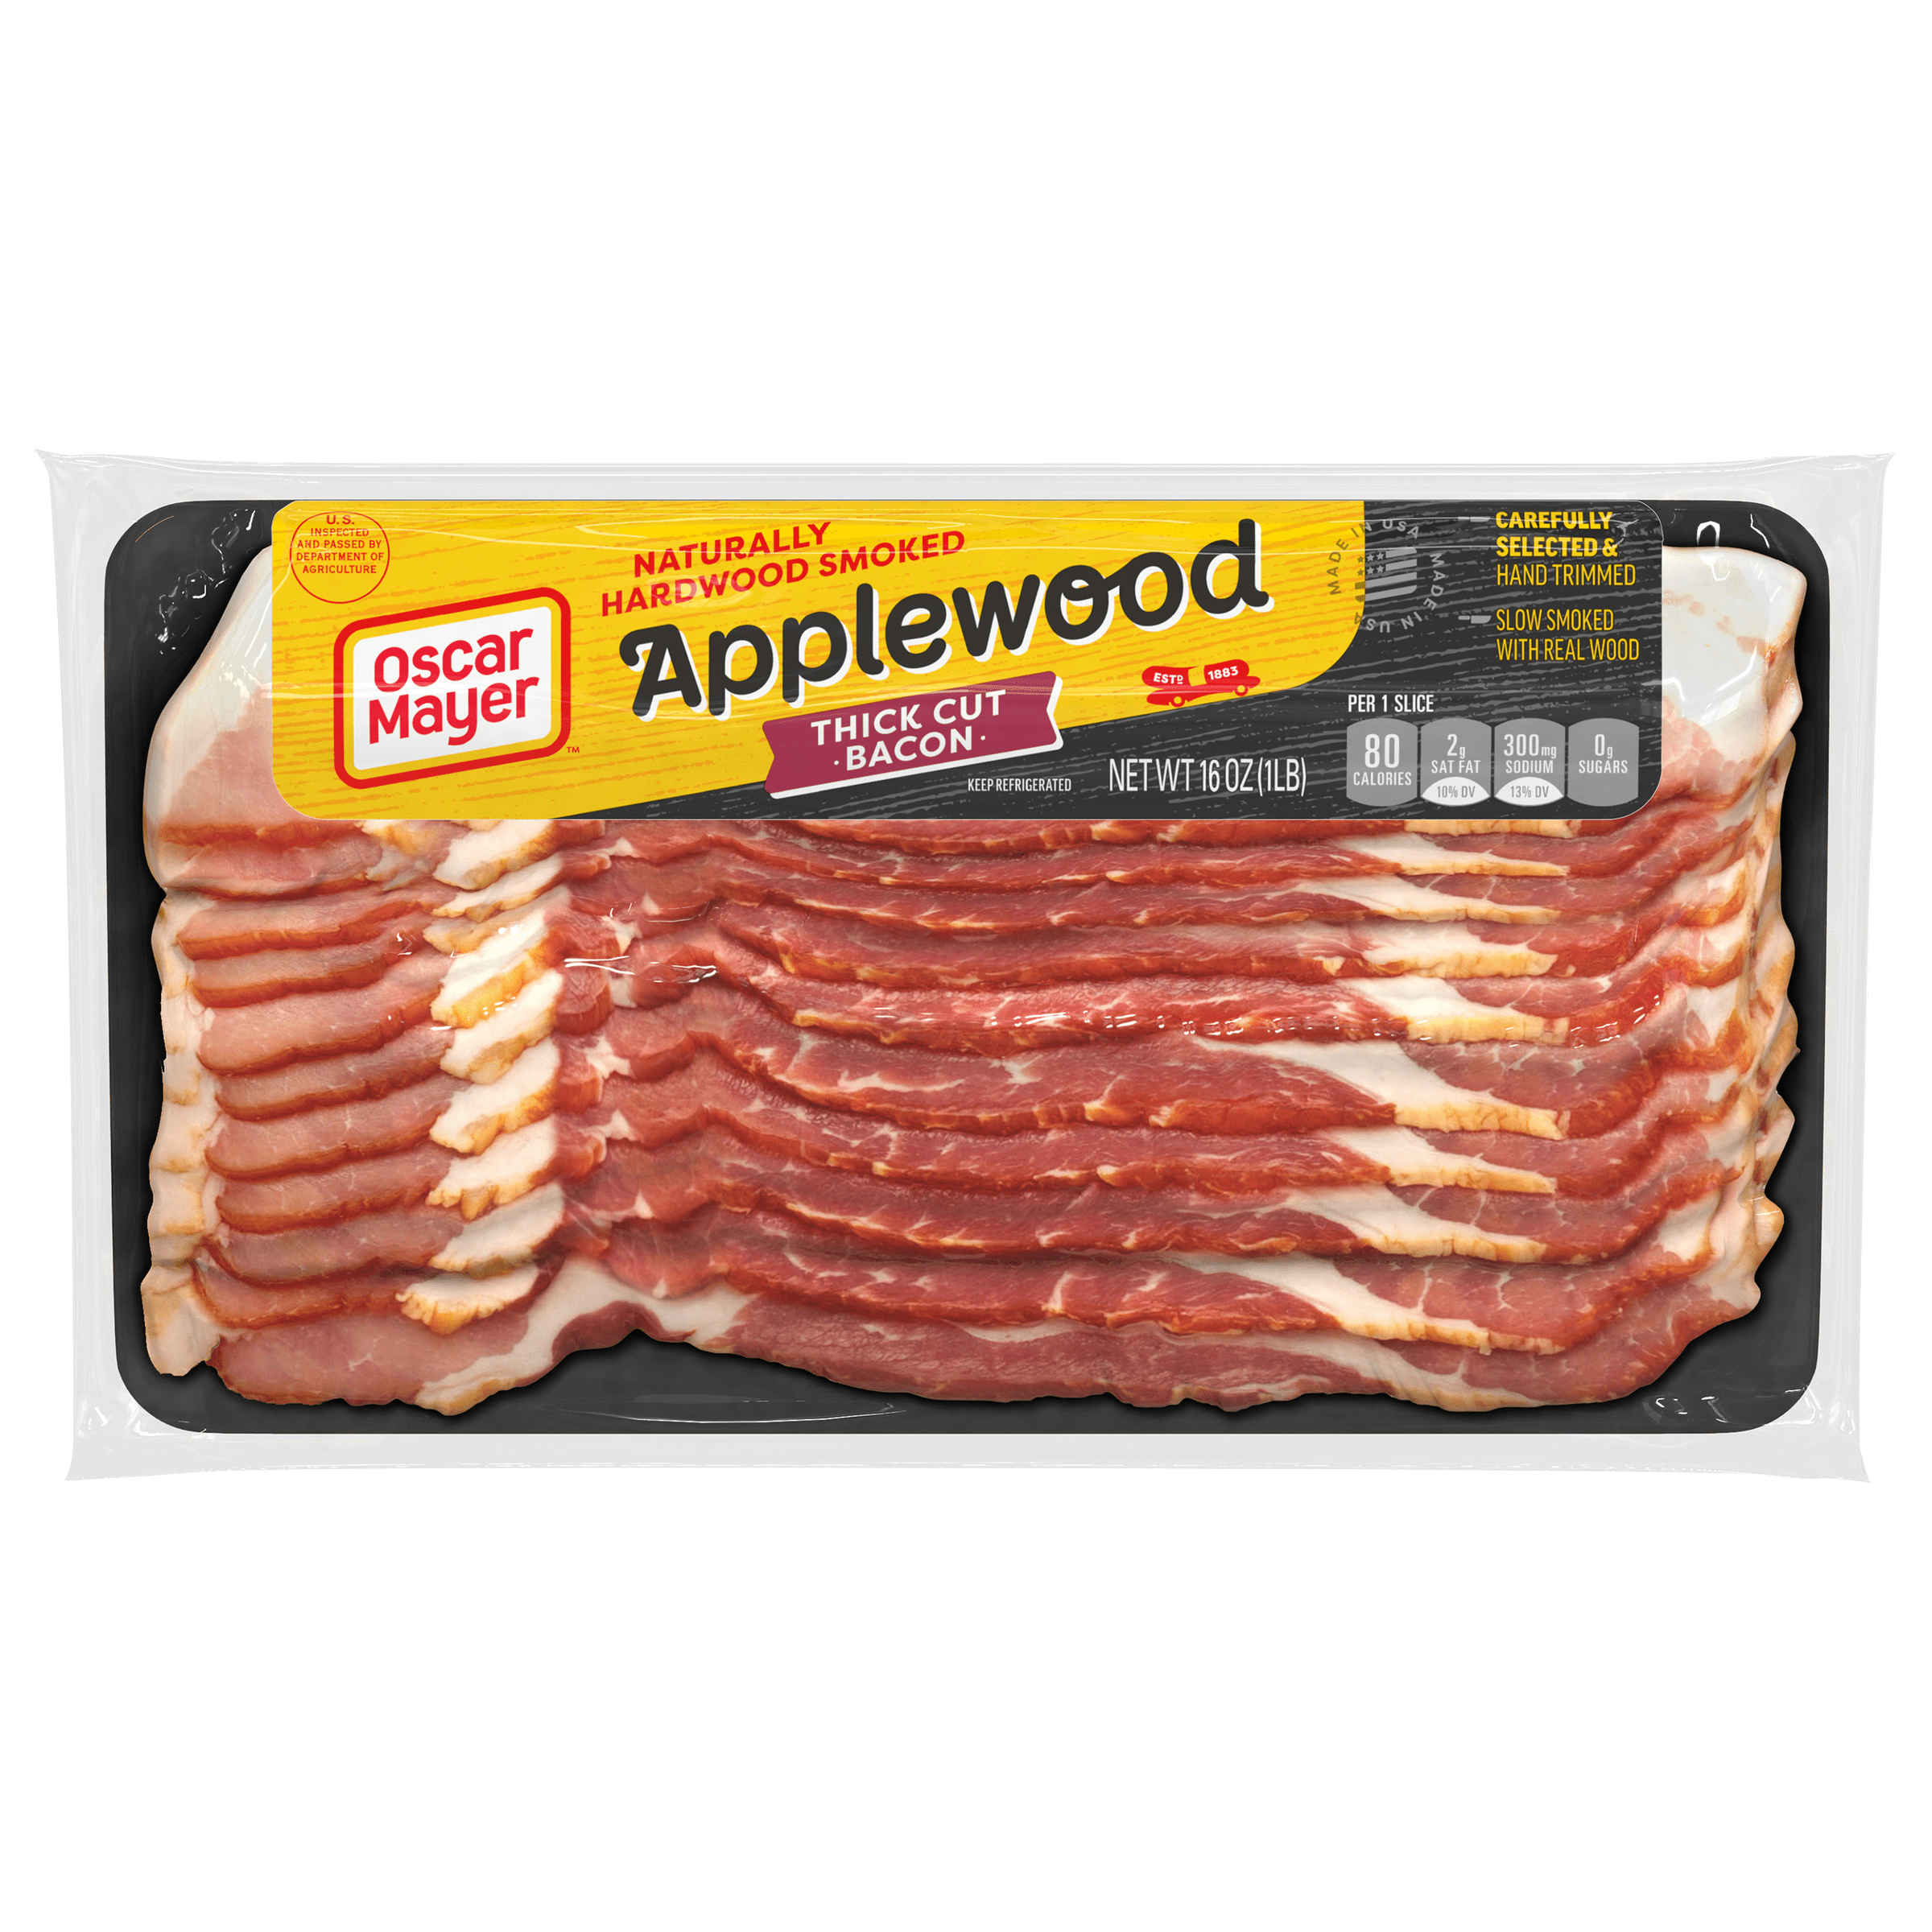 Naturally Hardwood Smoked Thick Cut Applewood Bacon